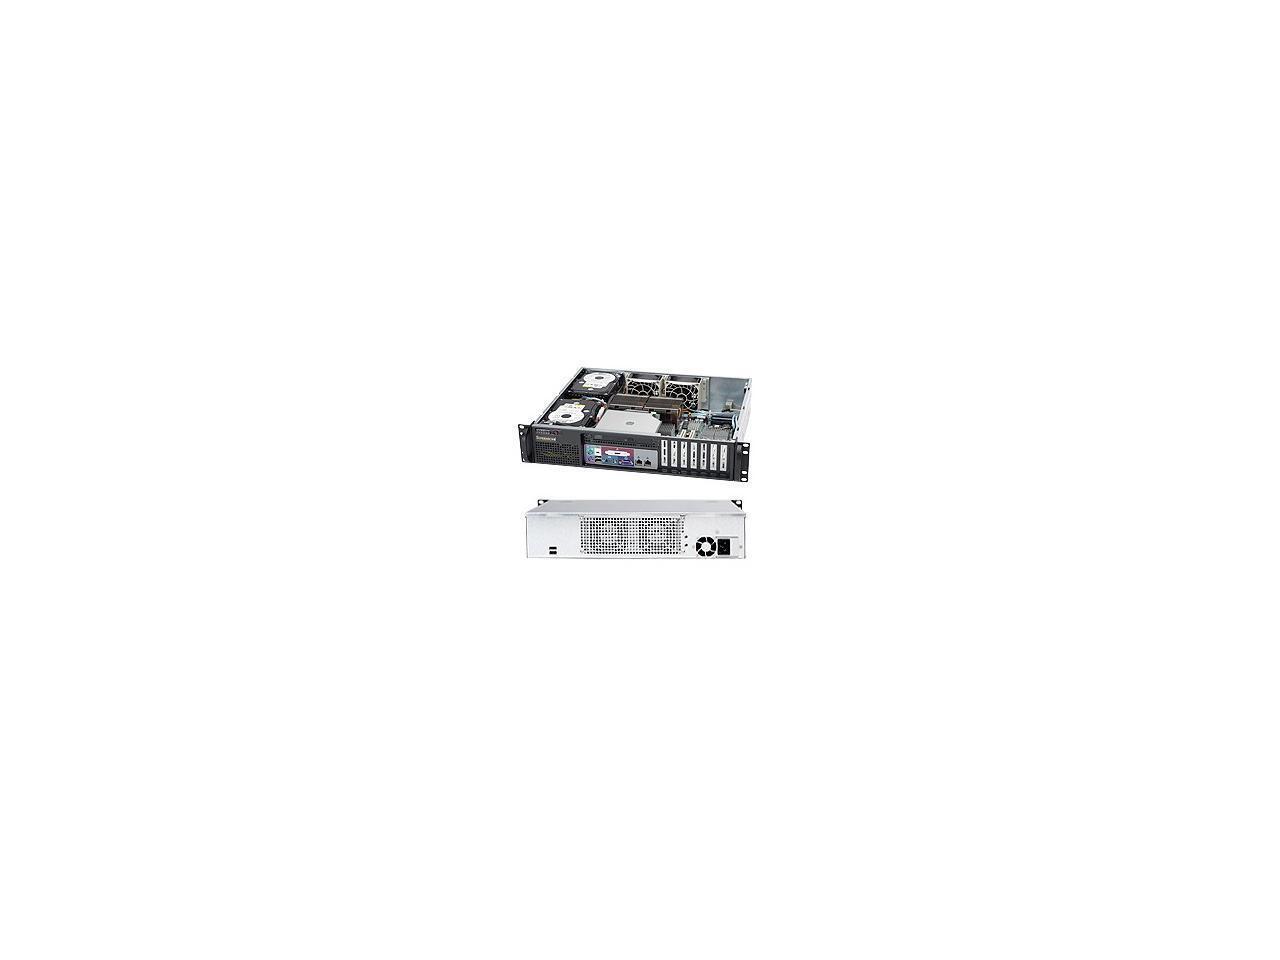 SUPERMICRO CSE-523L-505B Black 2U Rackmount Server Chassis Power Efficiency: